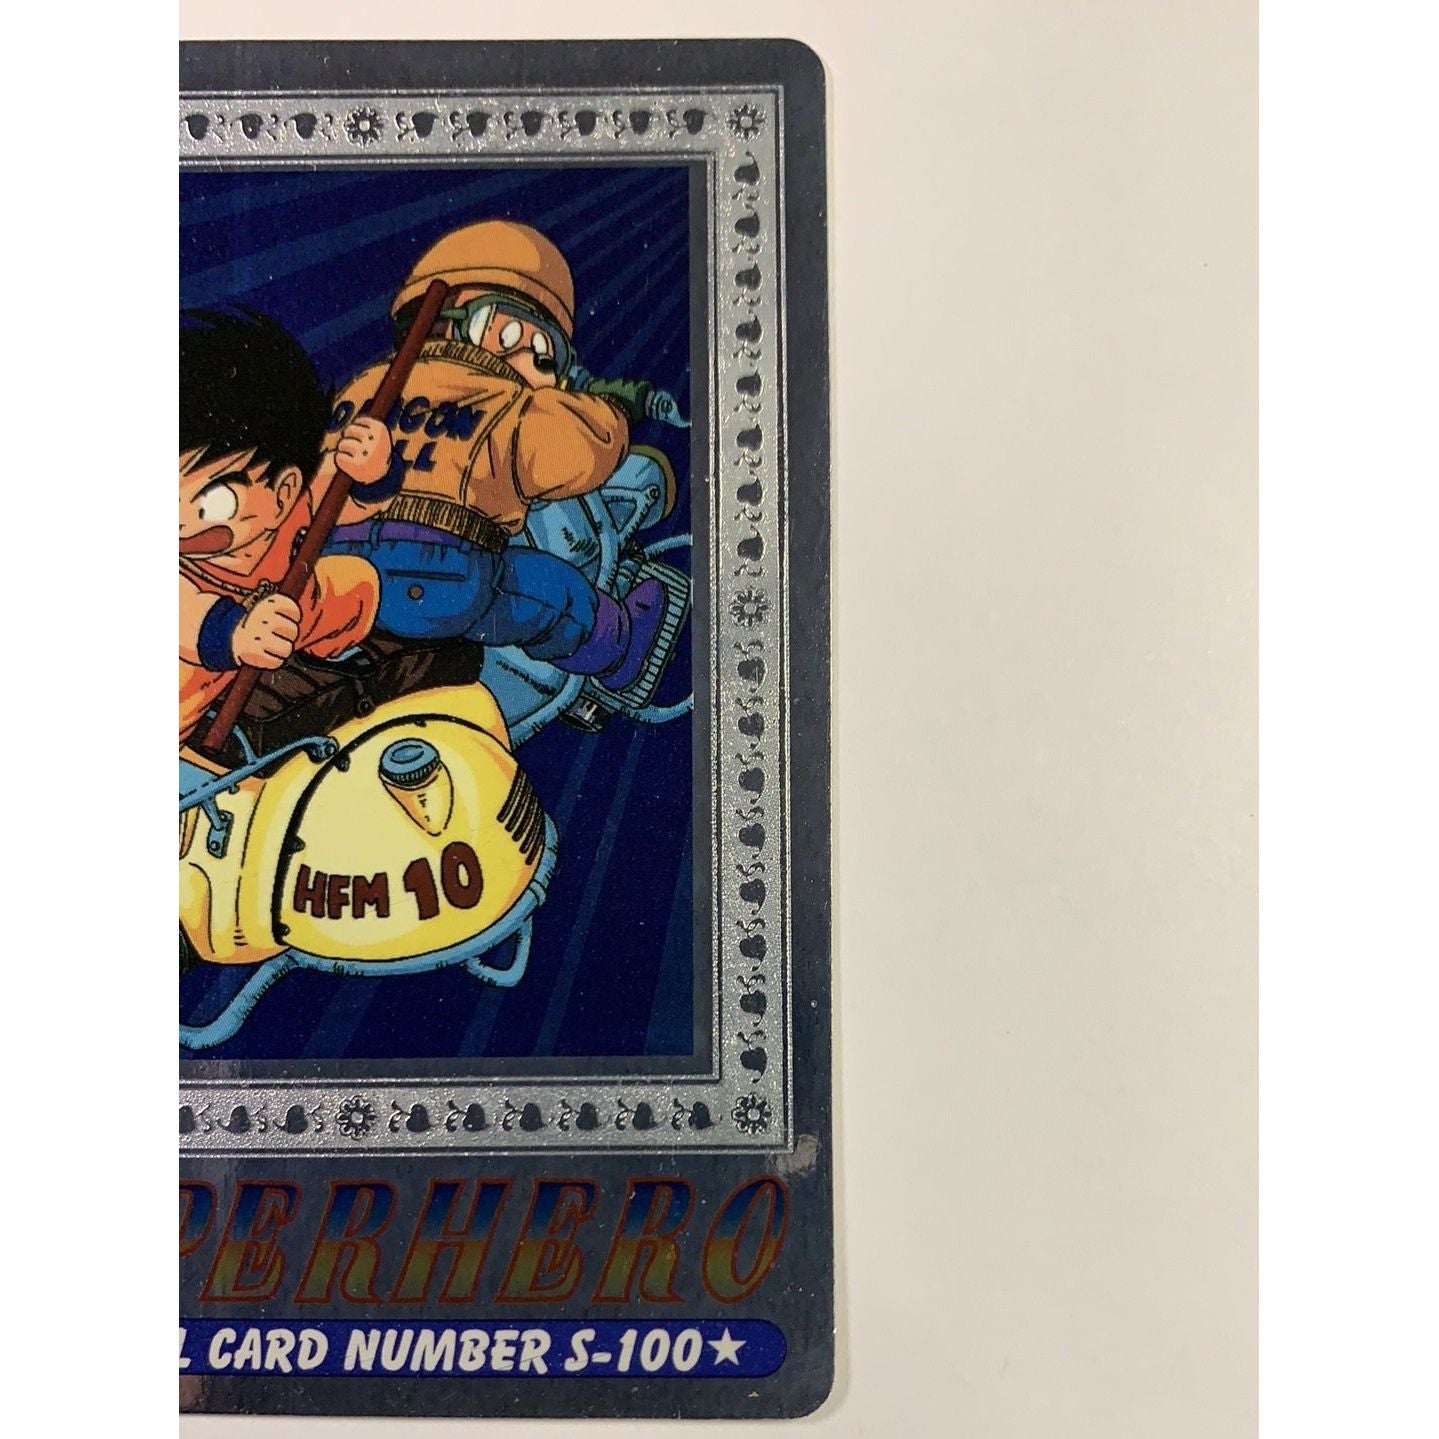  1995 Cardass Adali Super Hero Special Card S-100 Silver Foil Goku & Shu  Local Legends Cards & Collectibles